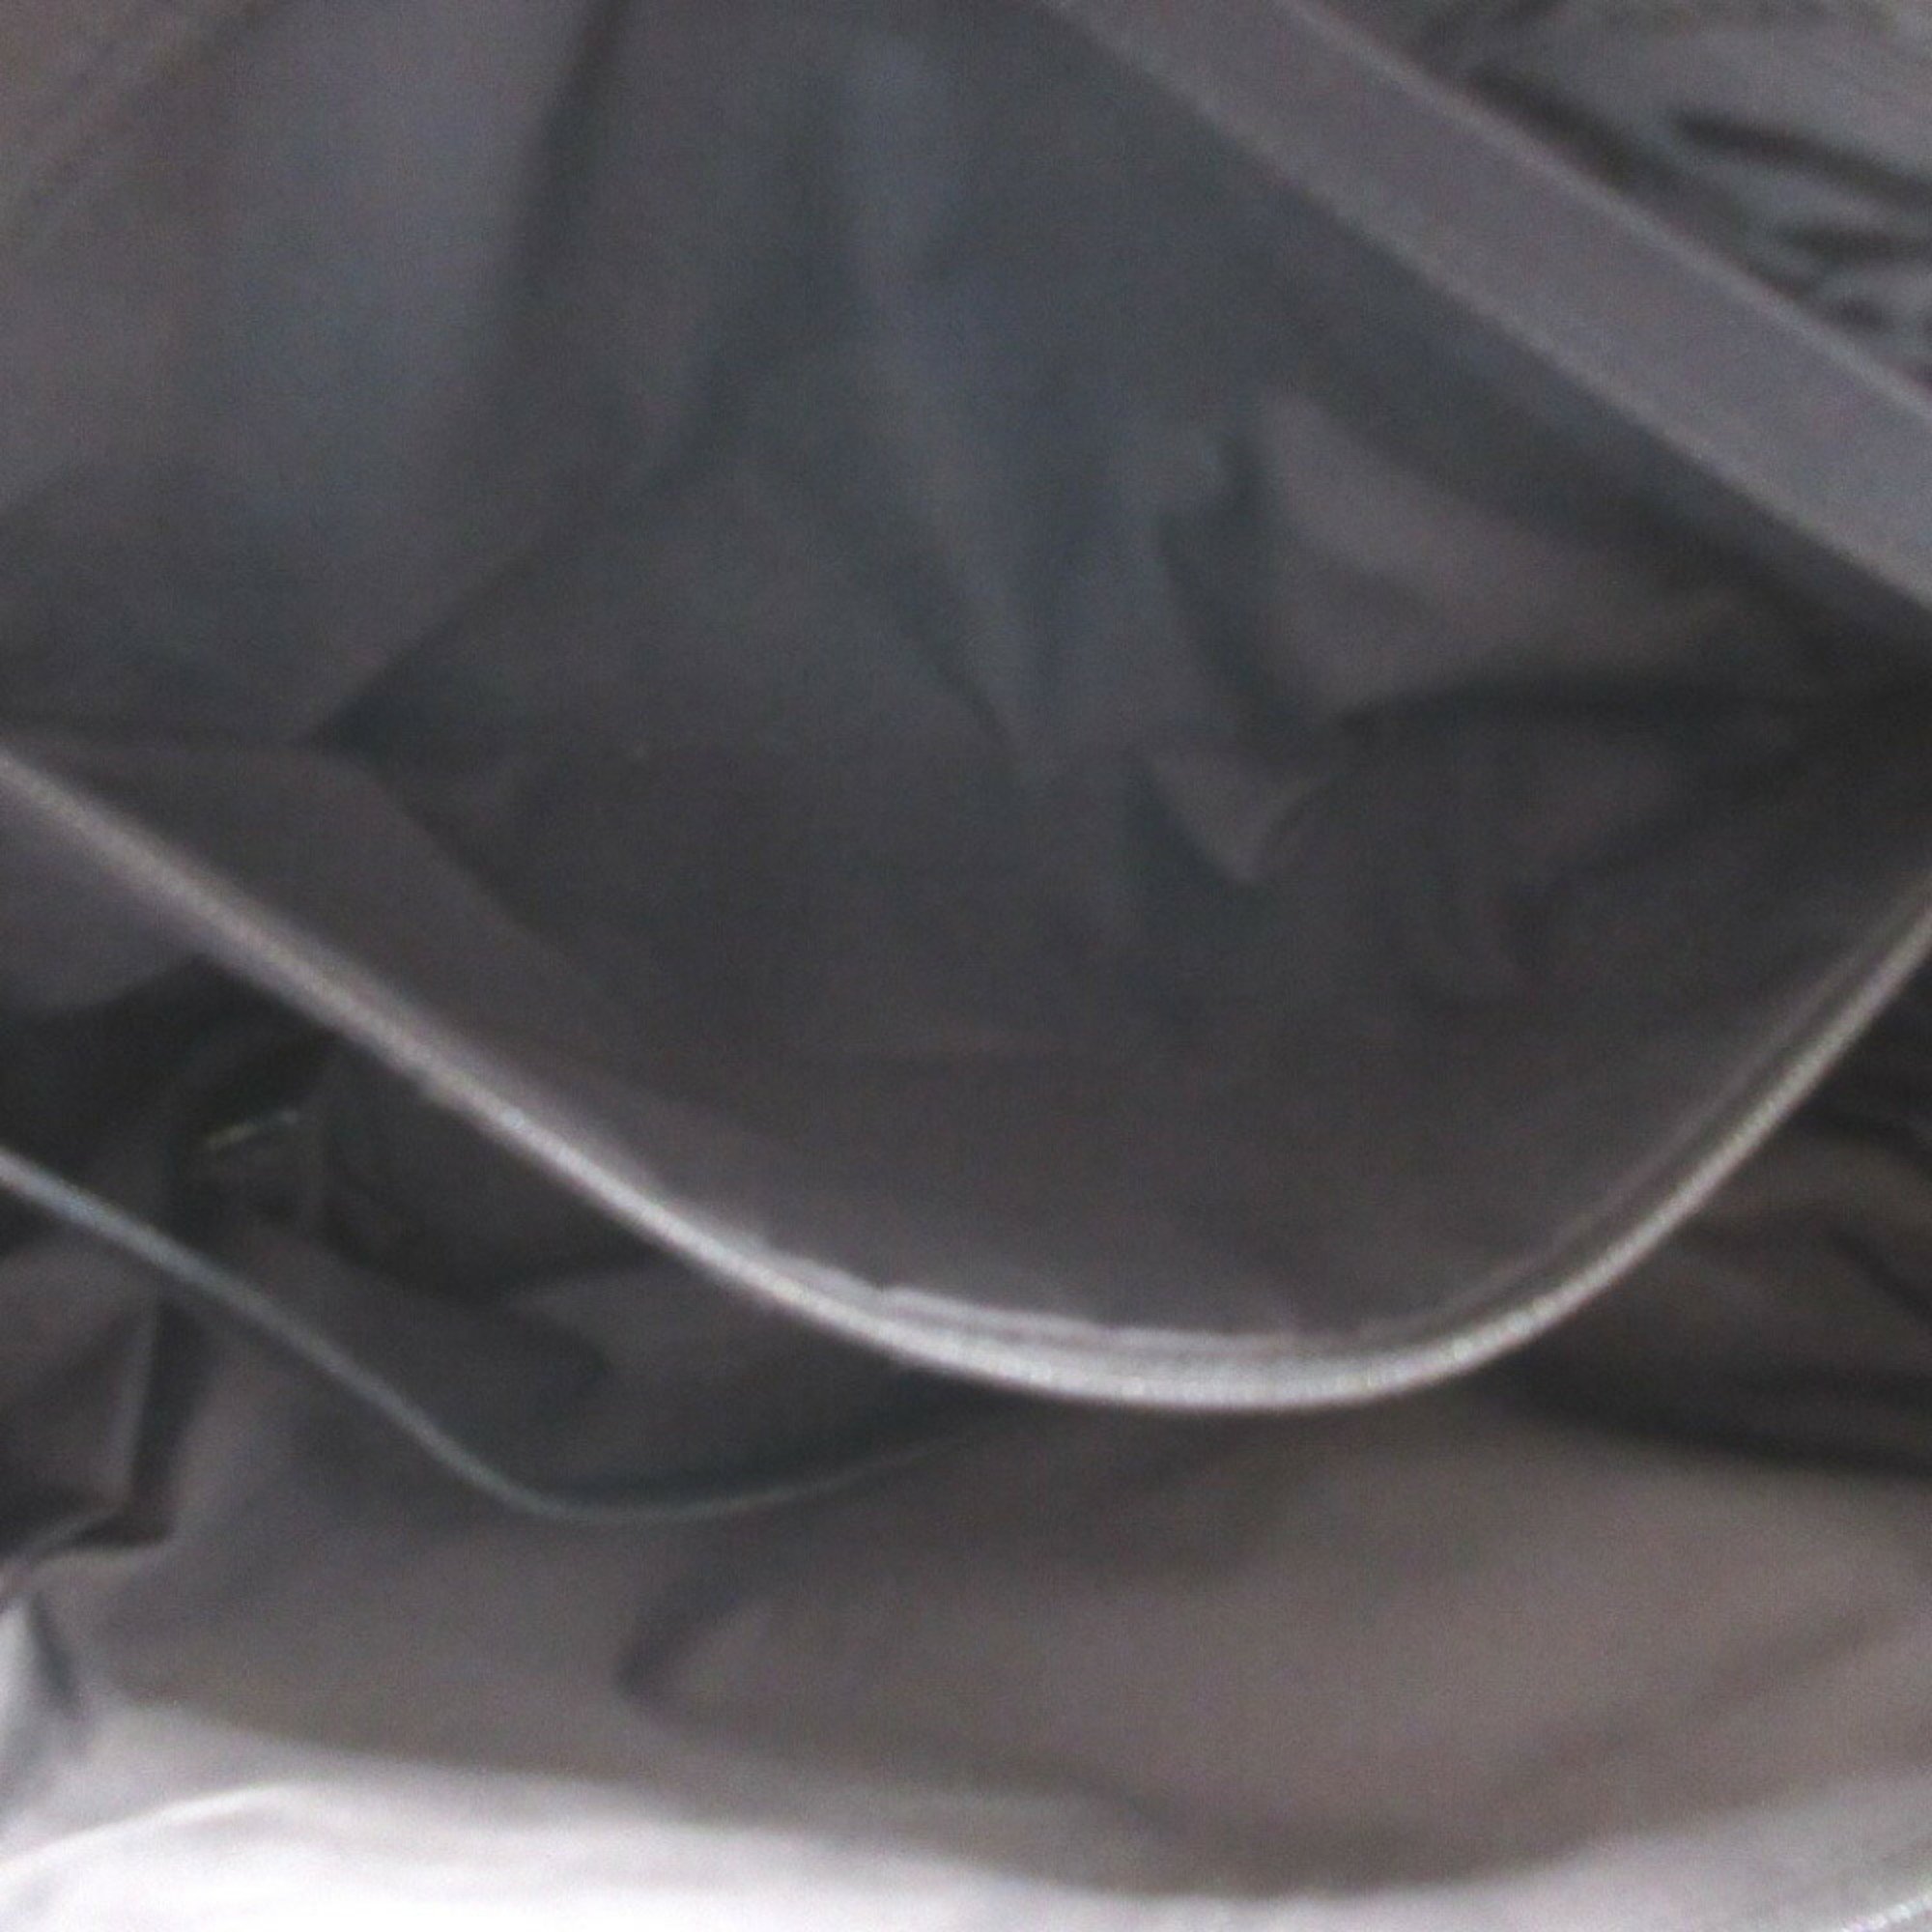 Chanel New Travel Line Tote TPM Neutra 8 Series Canvas Black Bag 1275CHANEL